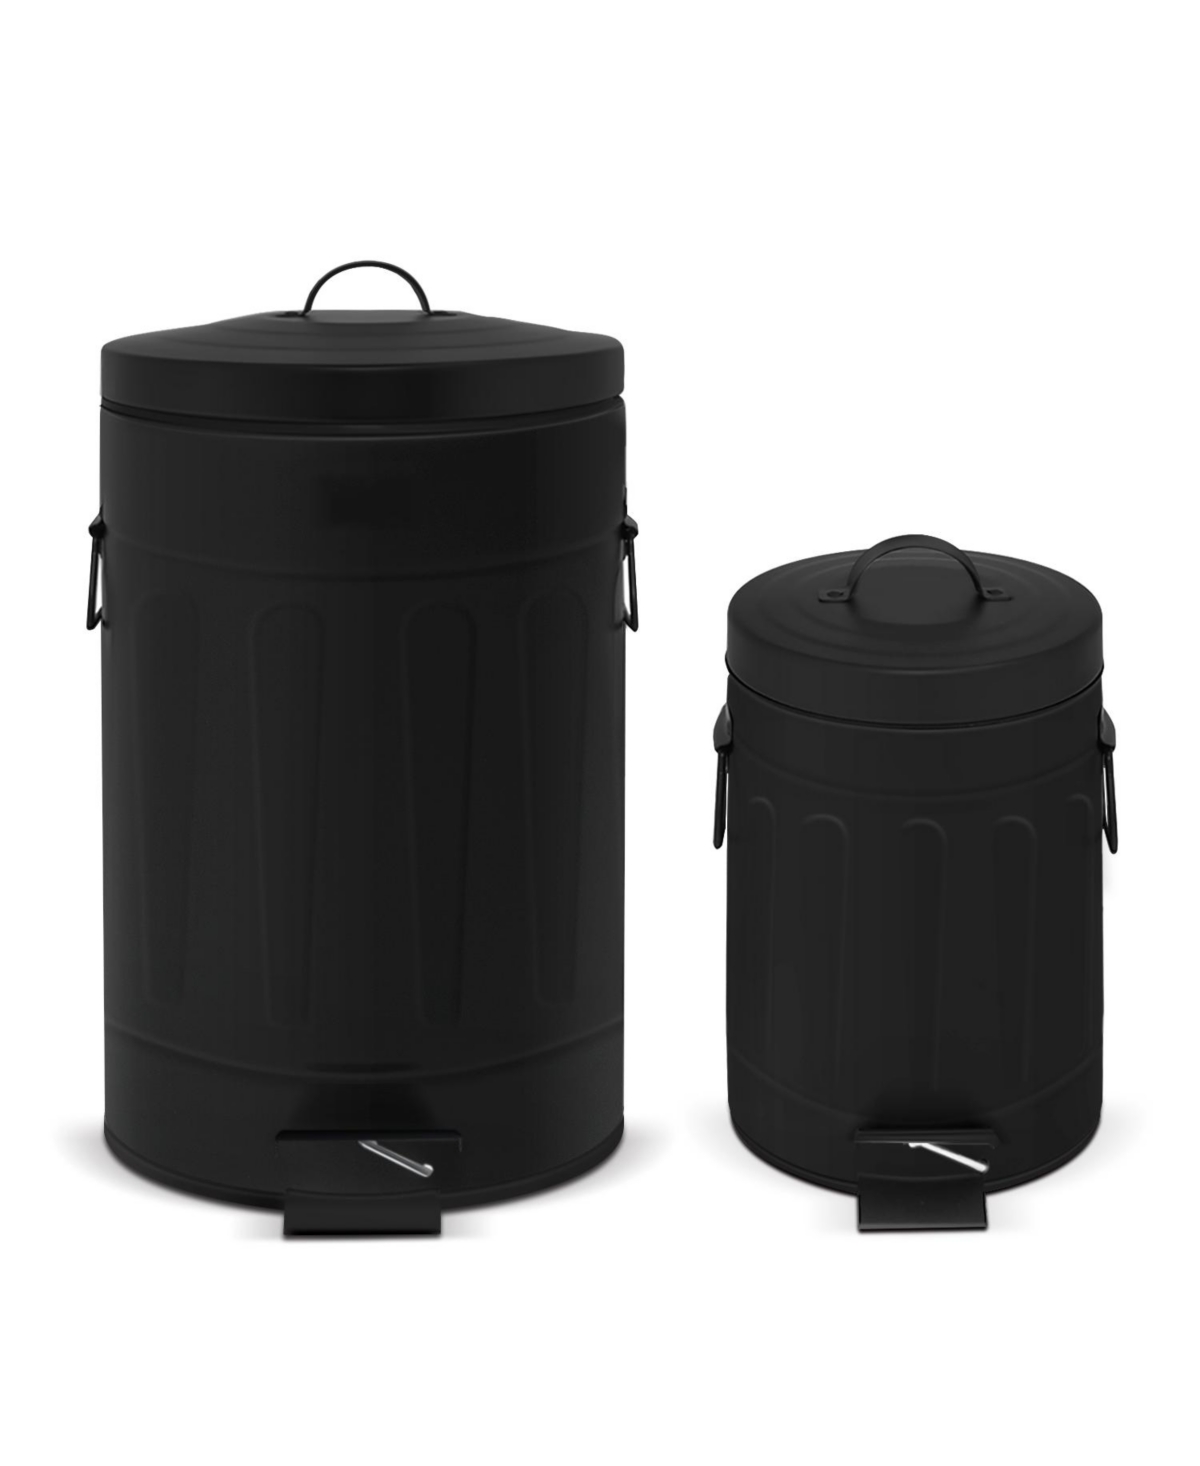 3.2 Gal./12 Liter and 0.8 Gal./3 Liter Old Time Style Round Black Color Metal Step-on Trash Can Set - Black